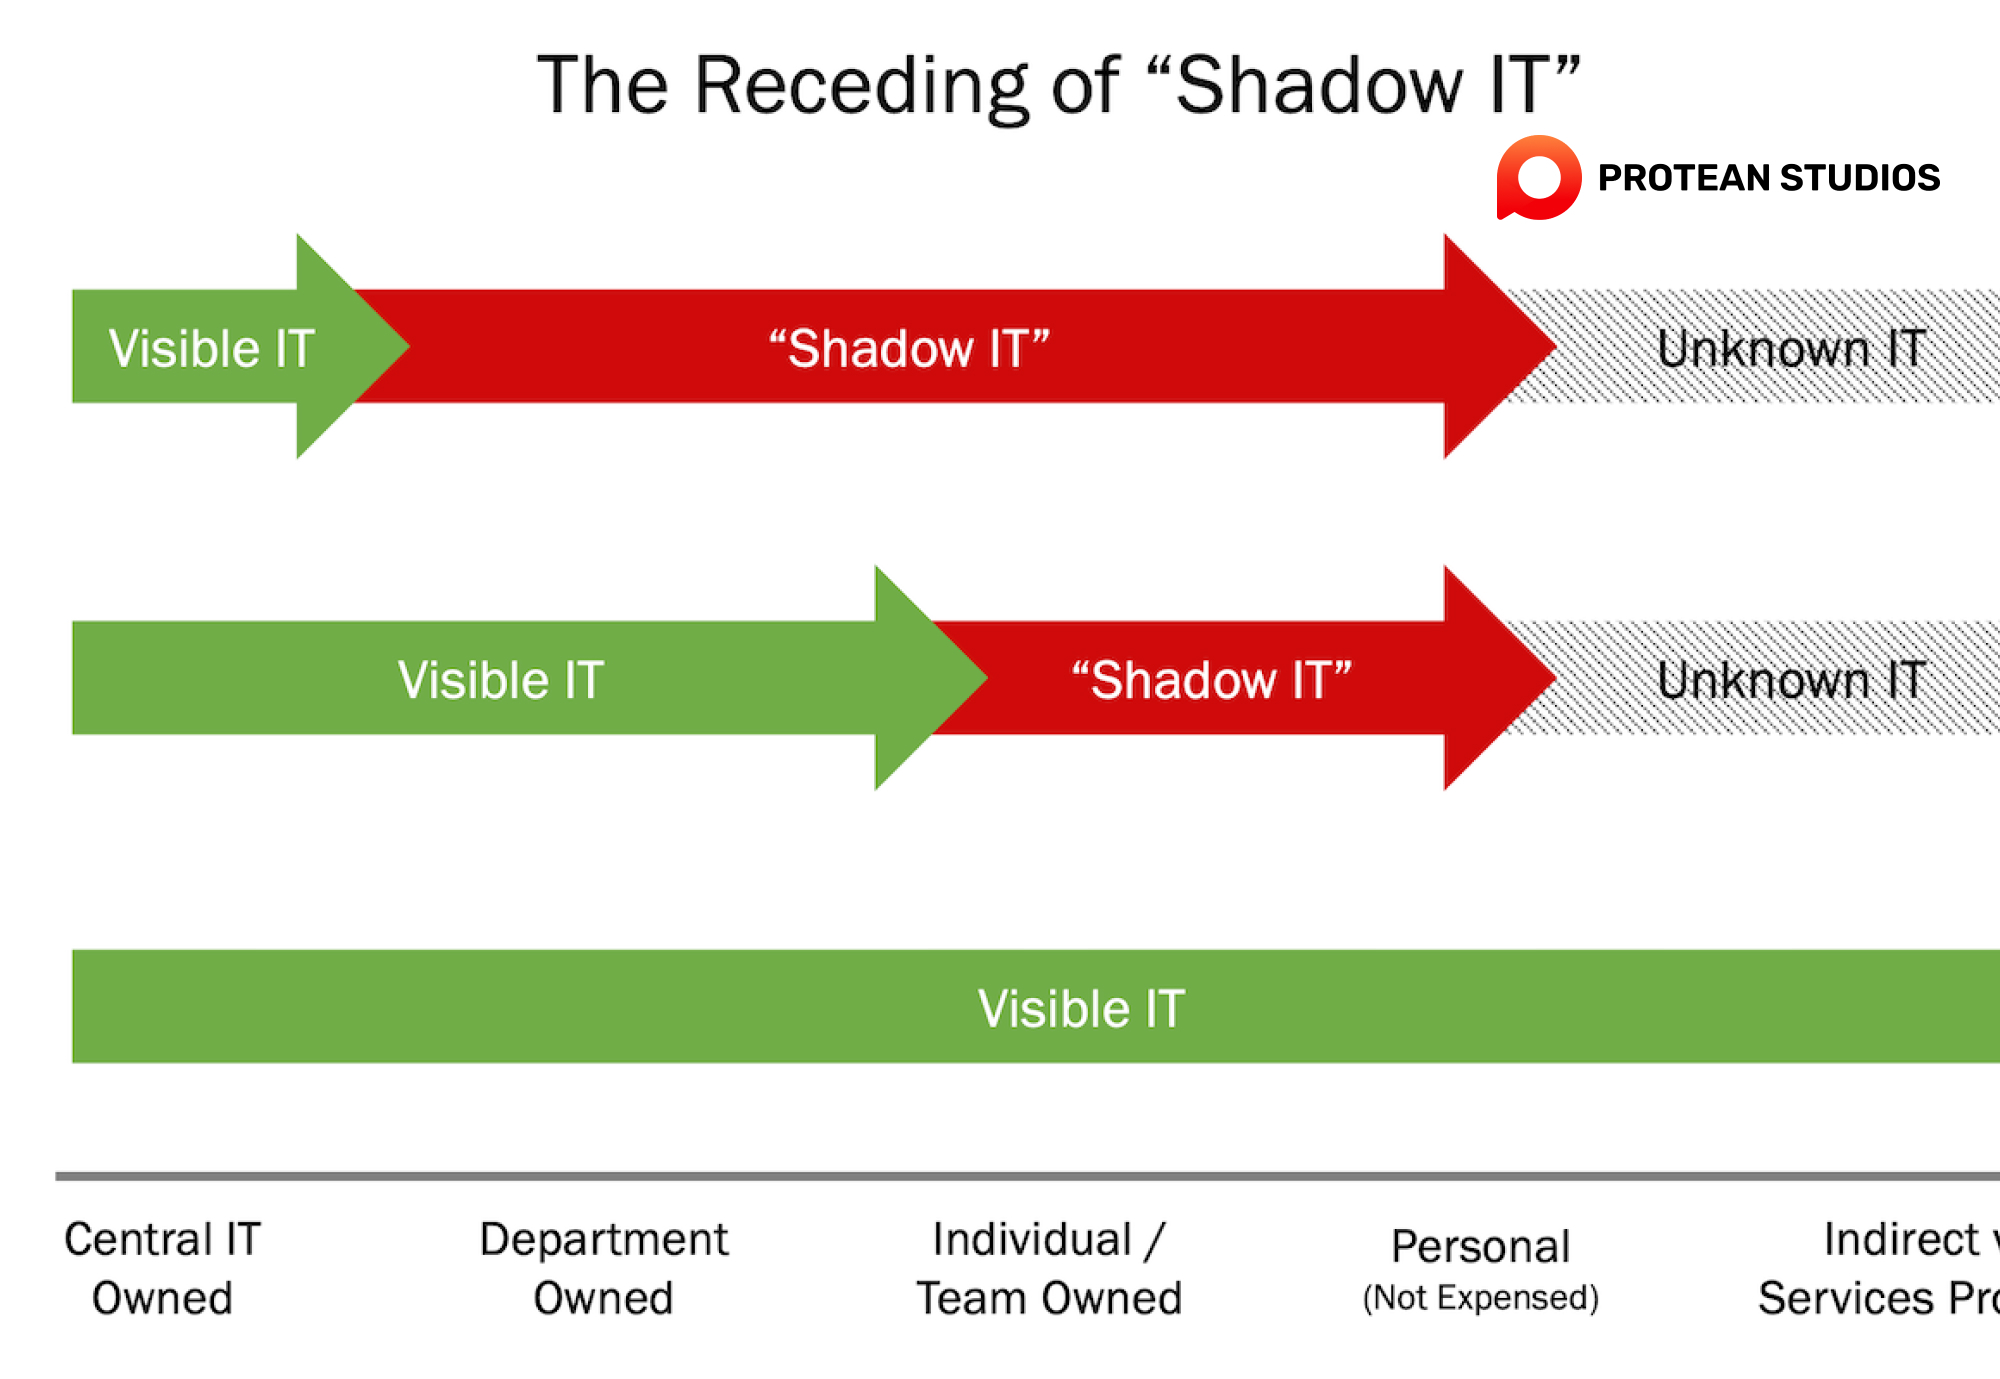 The receding of "Shadow IT"